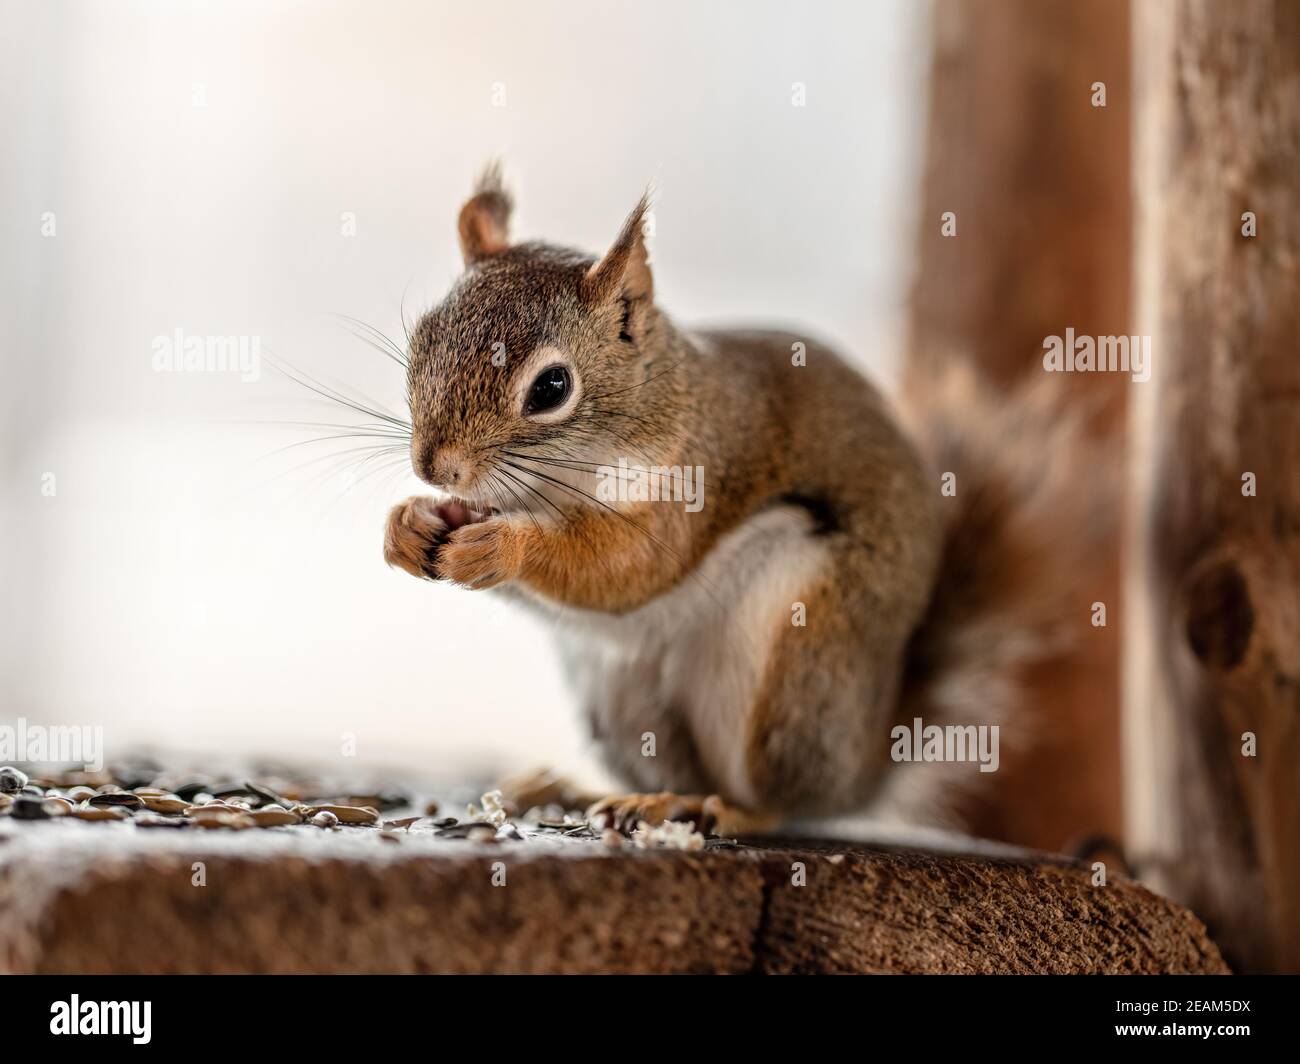 American red squirrel Tamiasciurus hudsonicus eating seeds, closeup detail Stock Photo